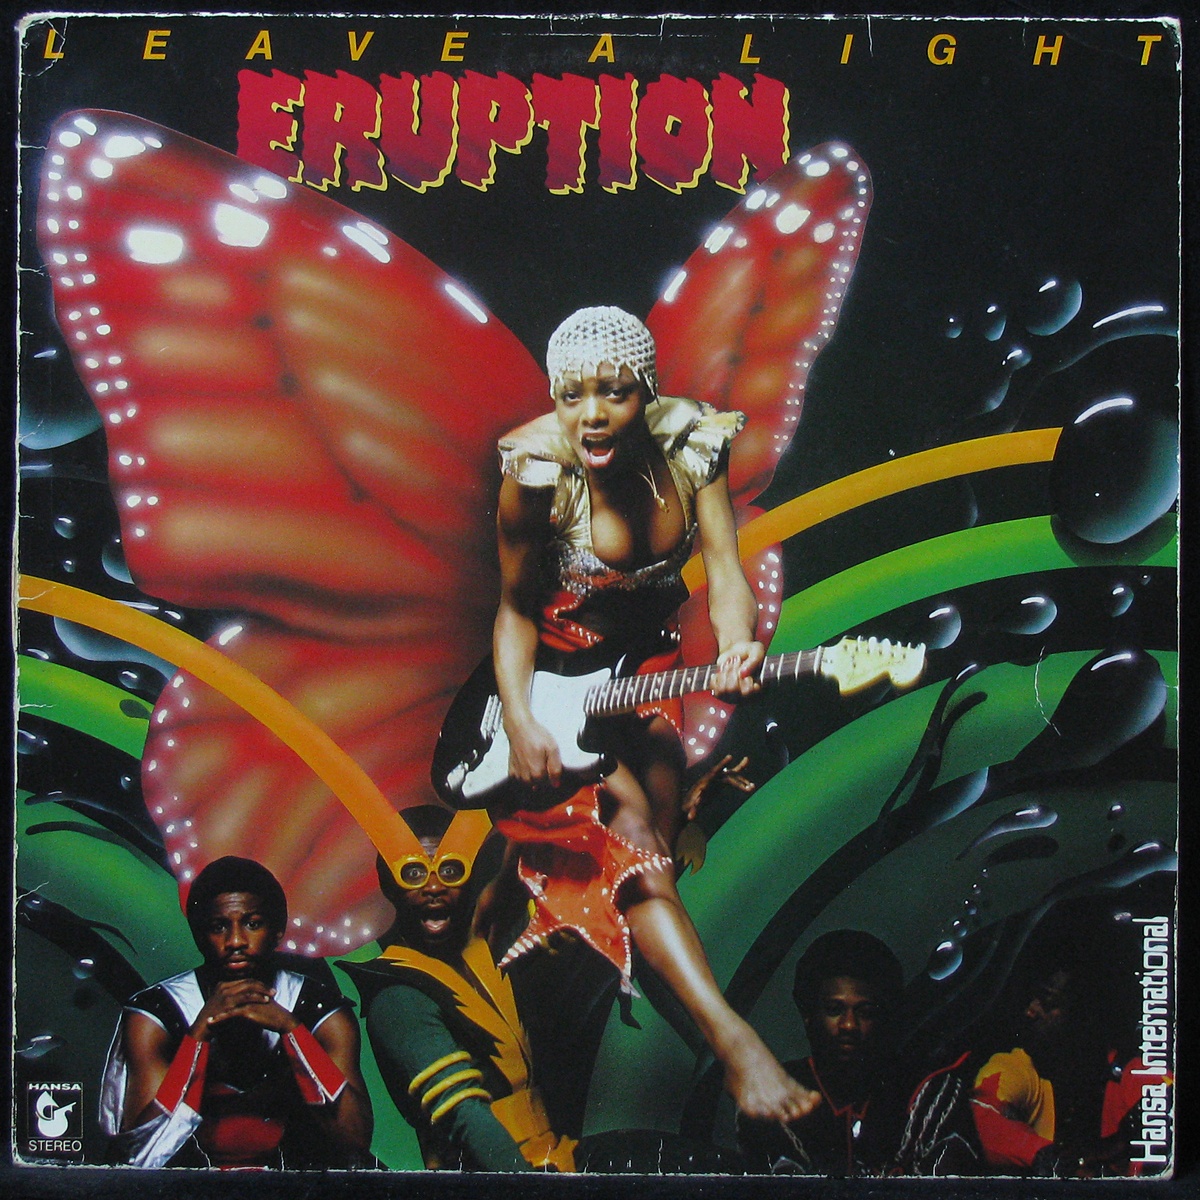 LP Eruption — Leave A Light фото